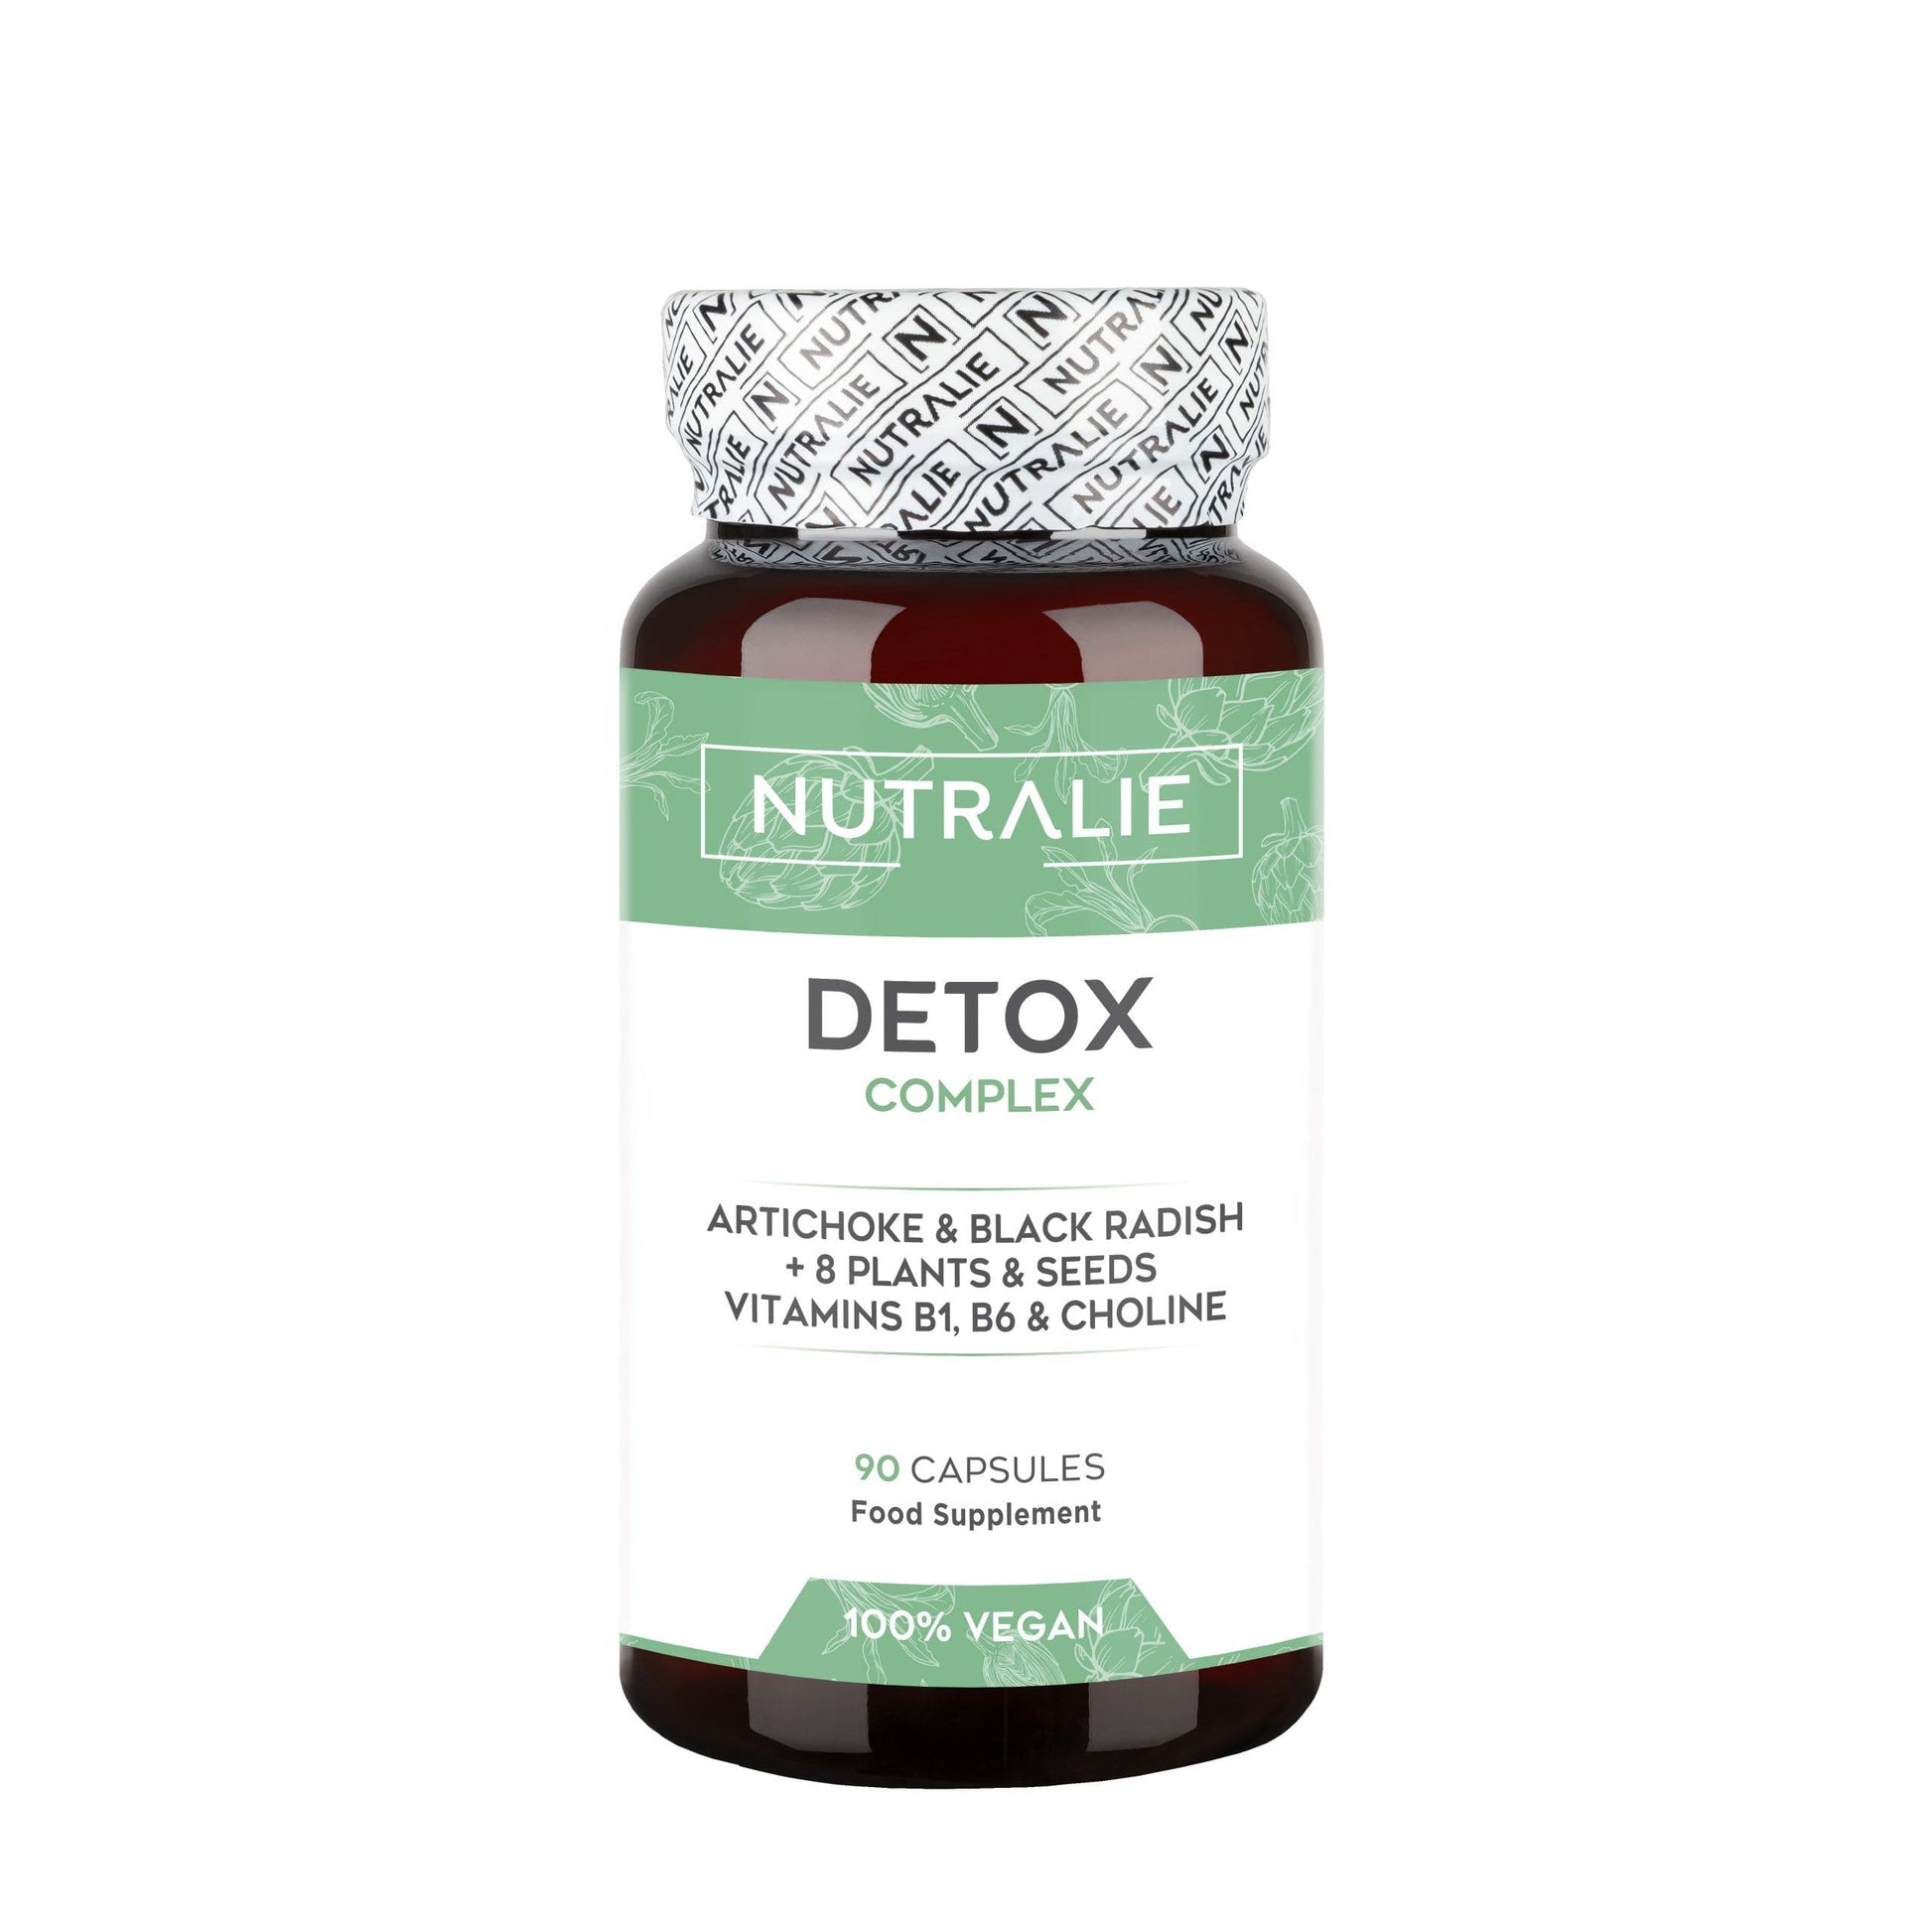 Detox Complex 90 cápsulas | Nutralie - Dietetica Ferrer